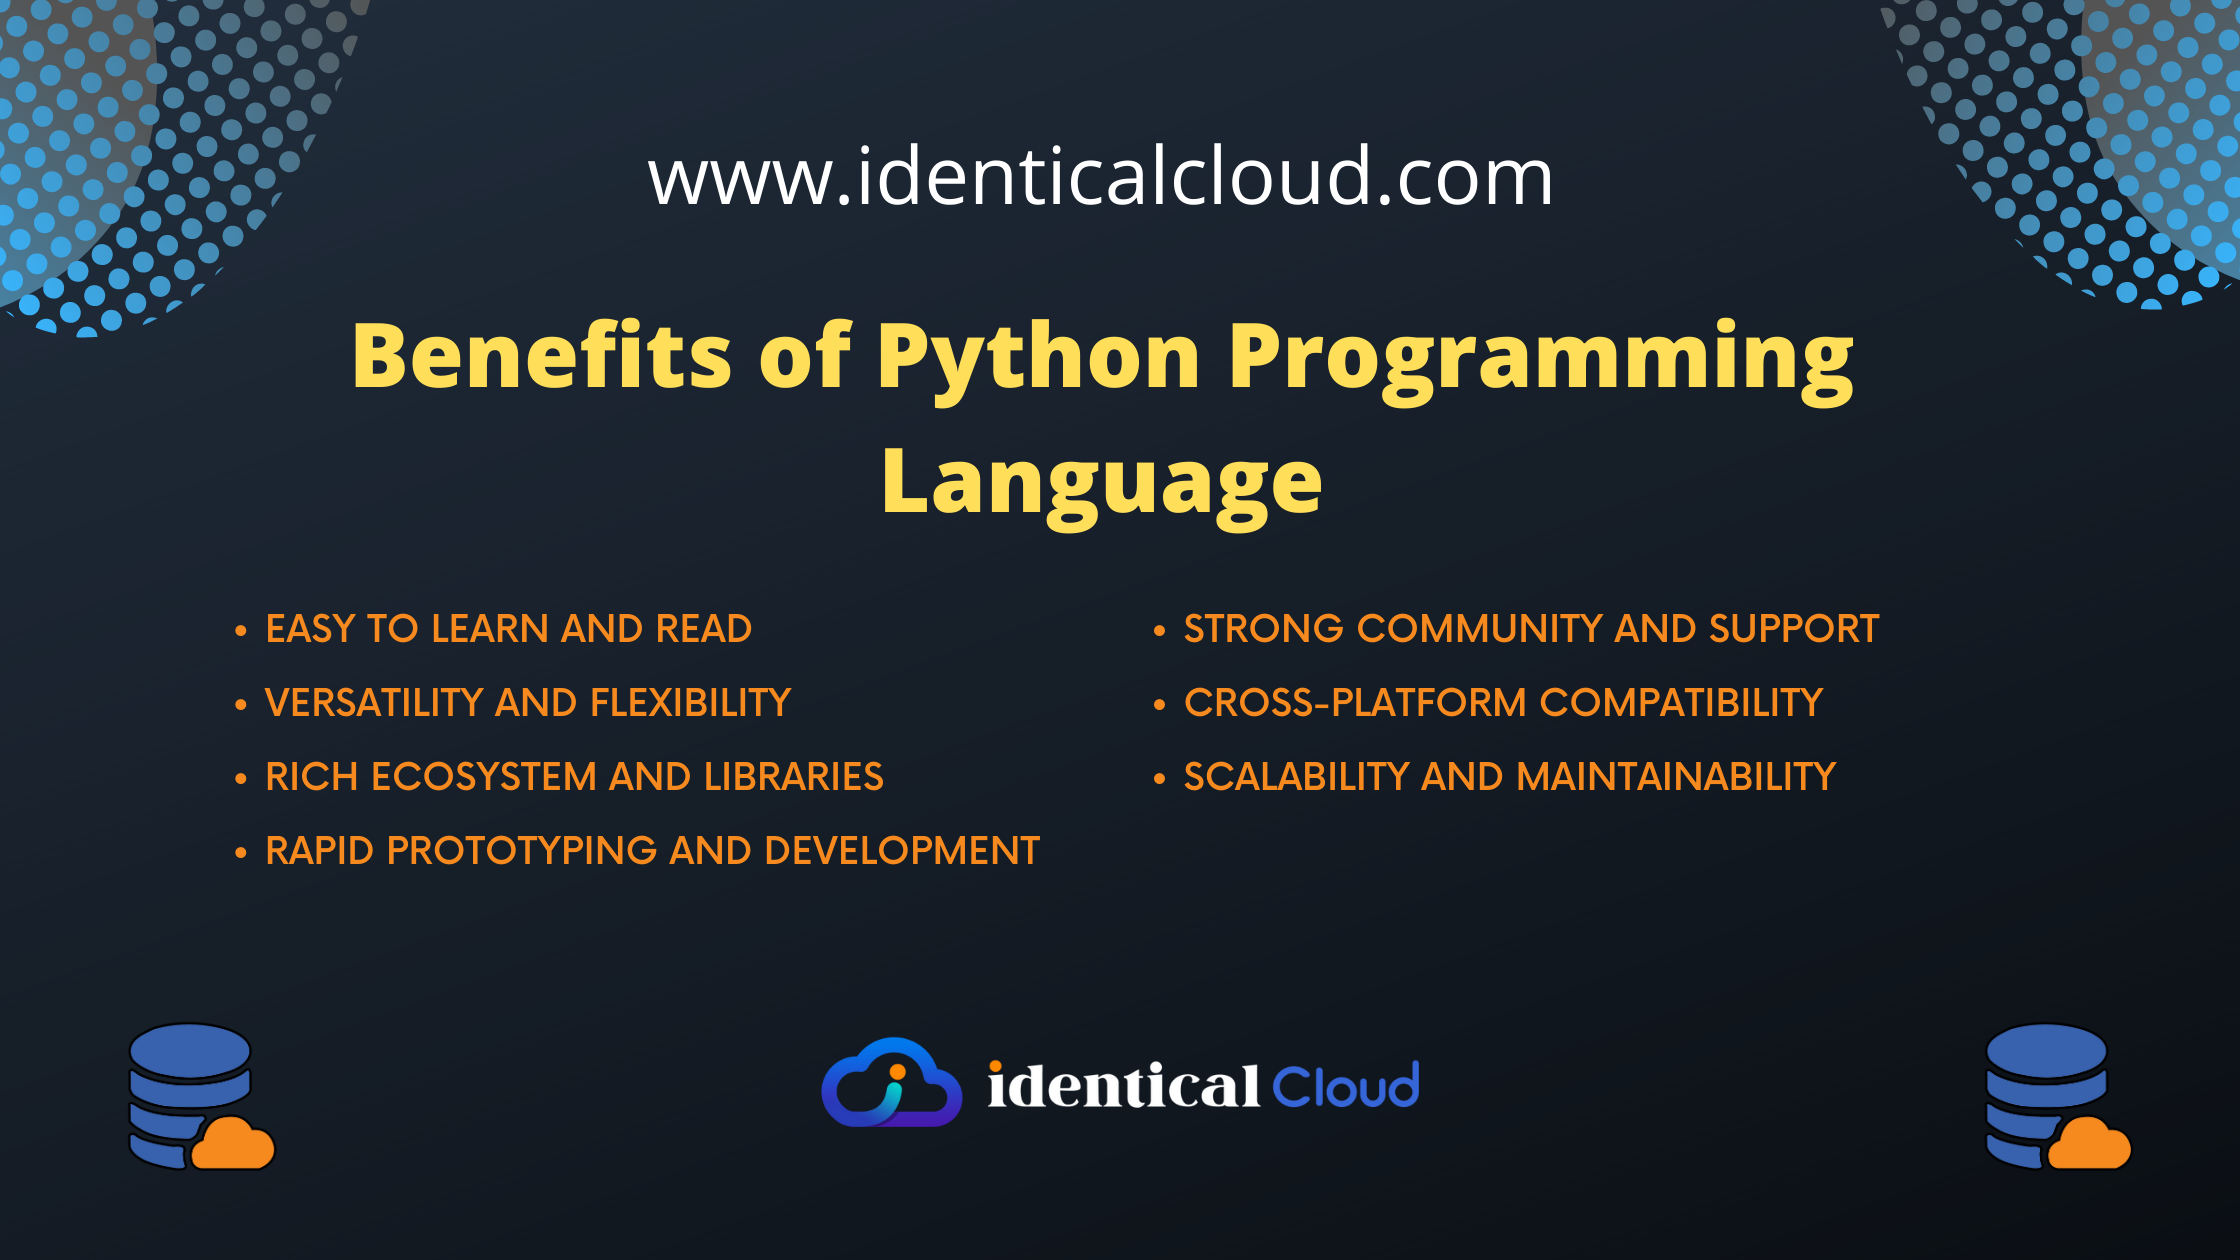 Benefits of Python Programming Language - identicalcloud.com